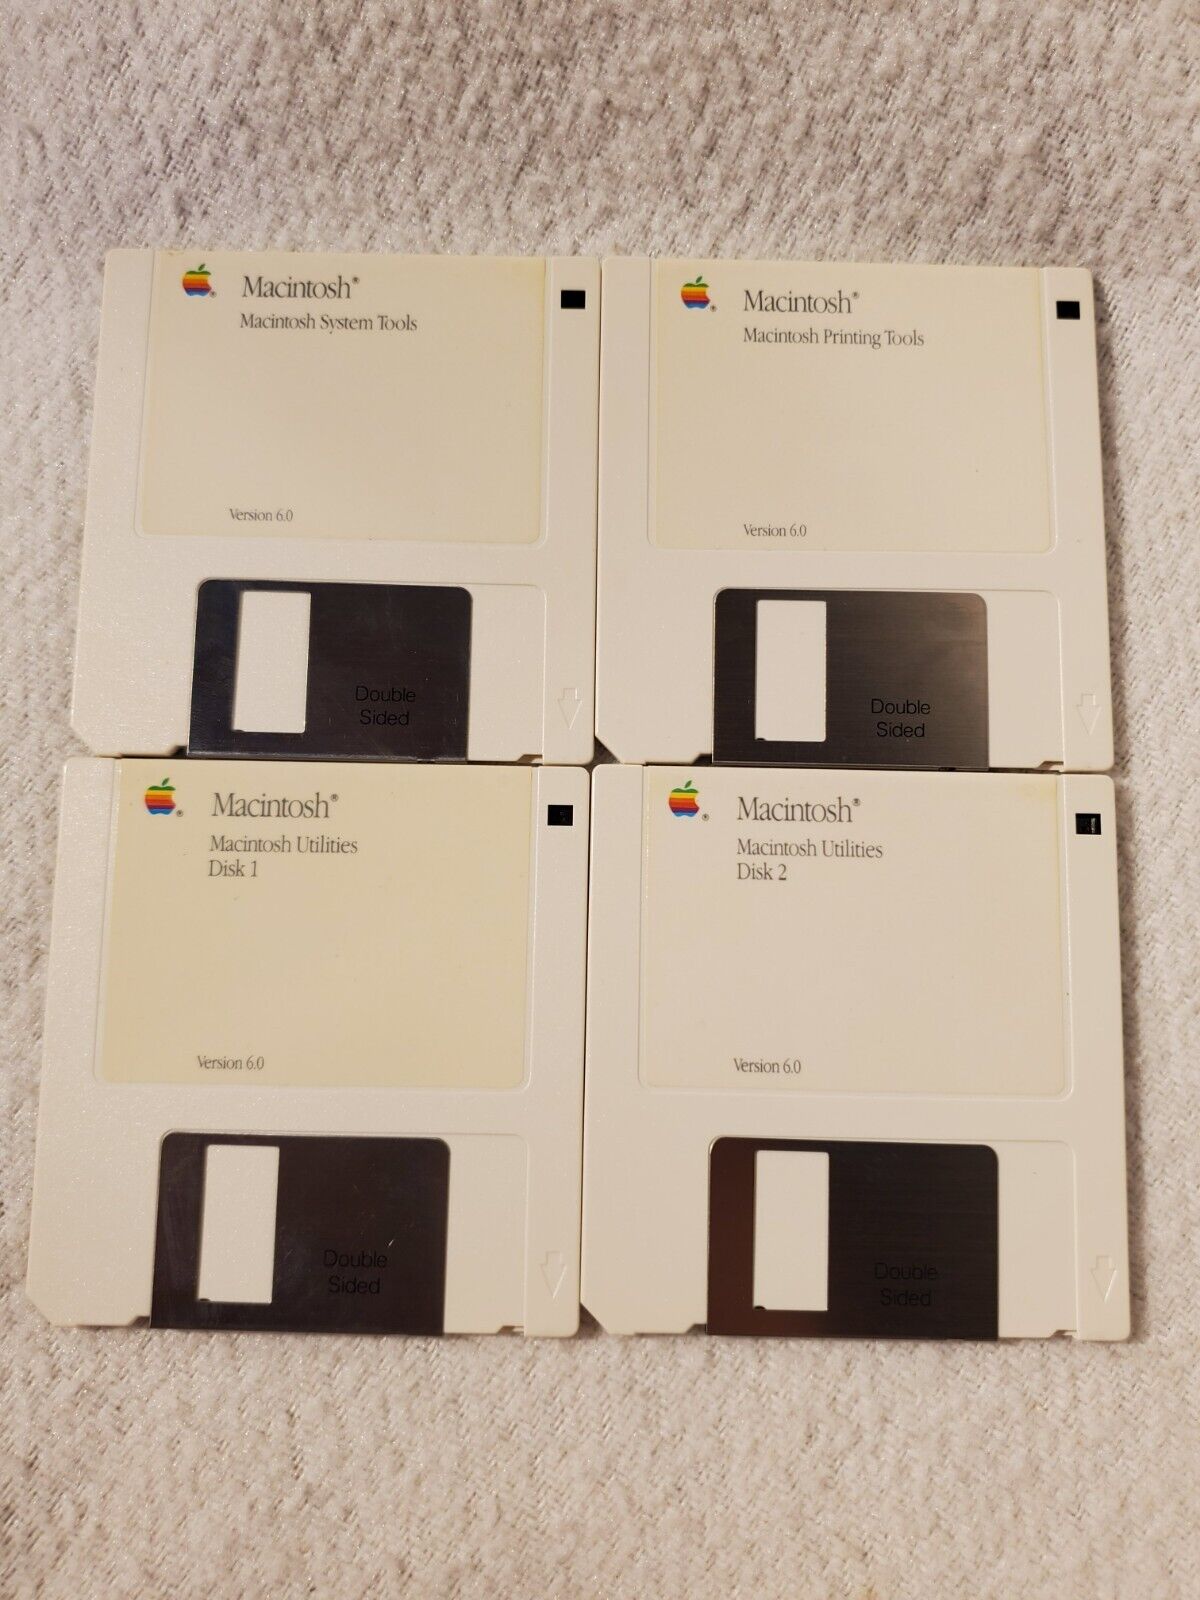 Vintage 1988 Apple Computer Macintosh Version 6.0 Macintosh System Tools Disks